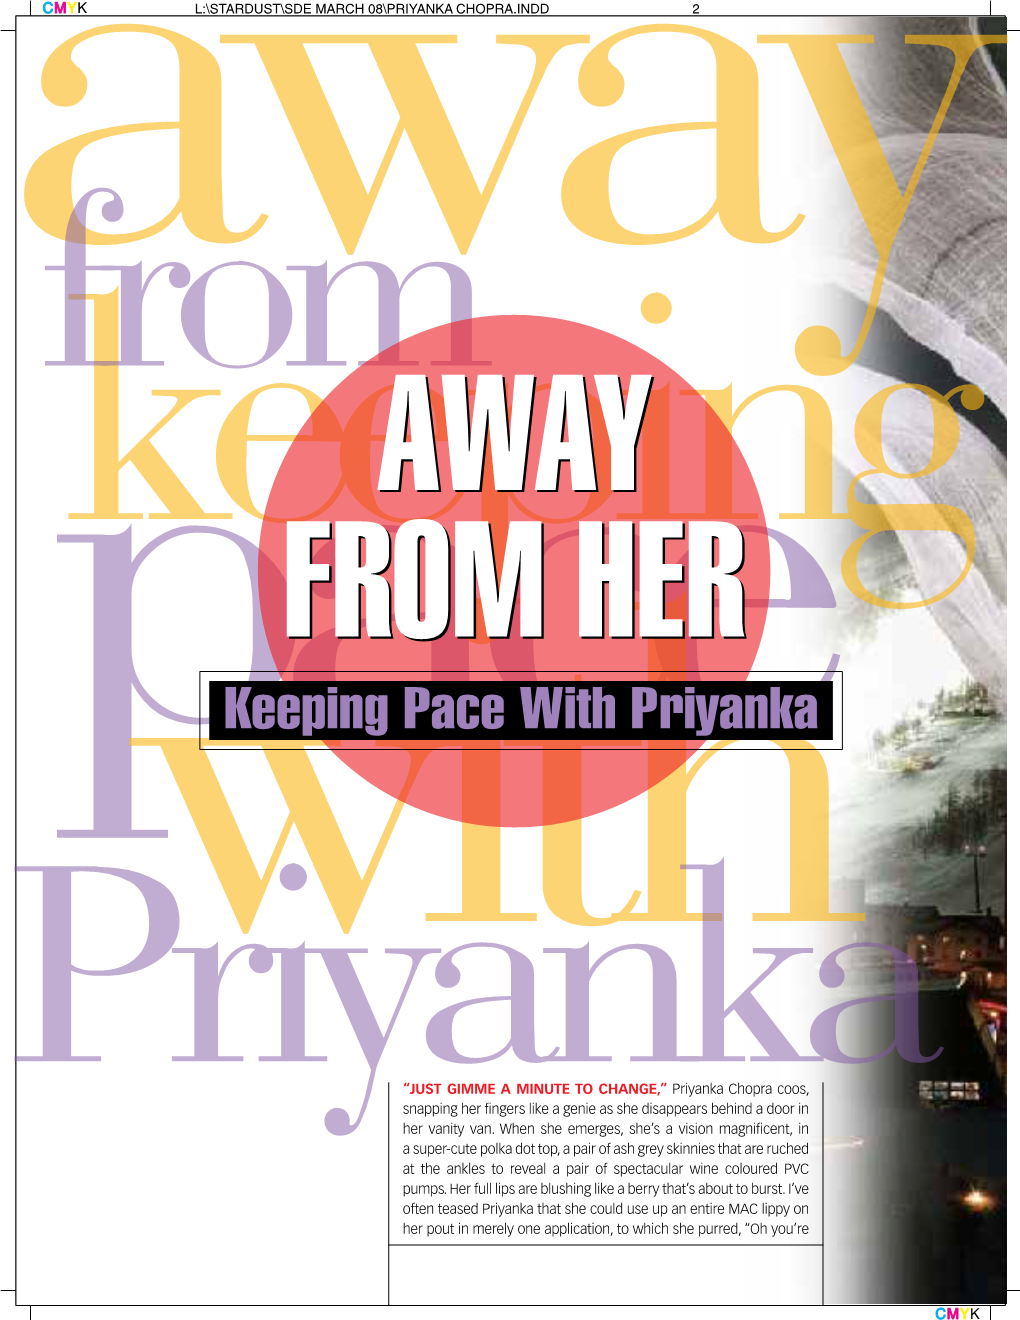 Keeping Pace with Priyanka